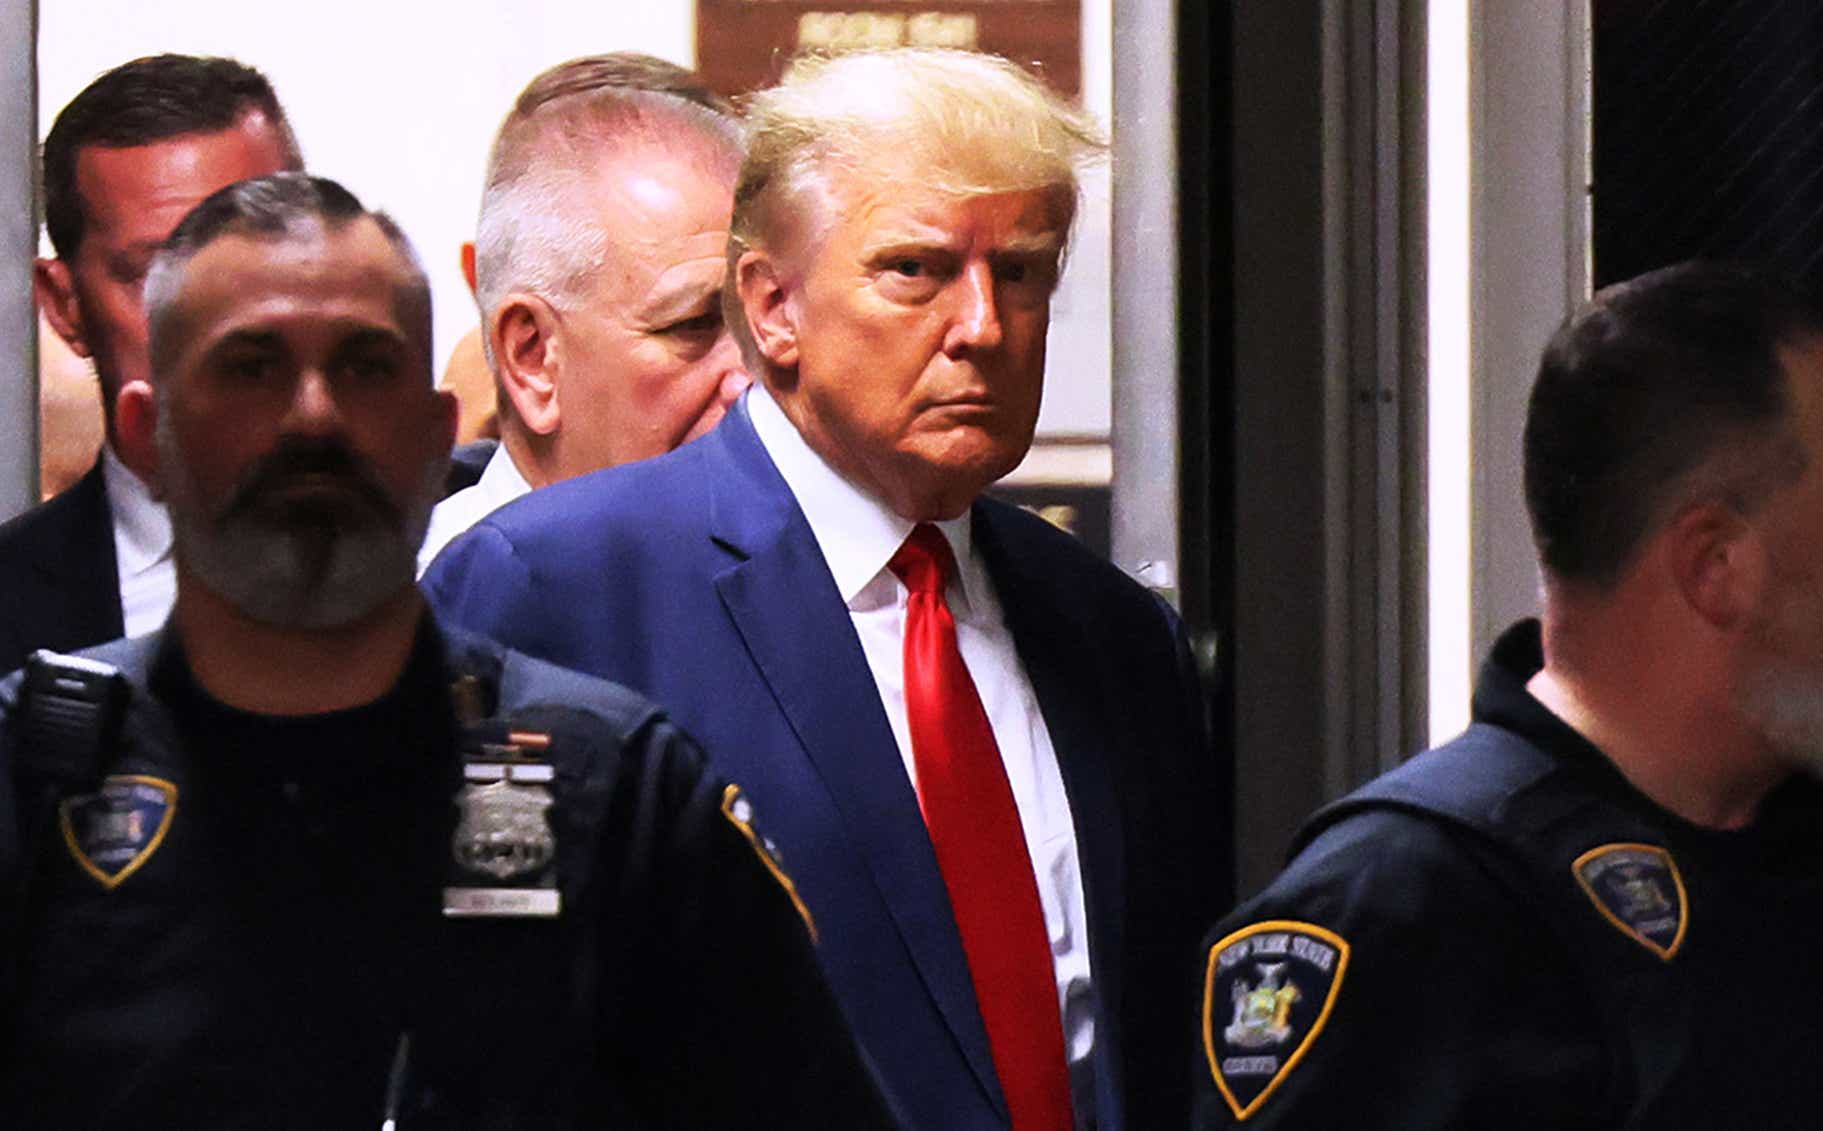 Former U.S. President Donald Trump arrives for his arraignment at Manhattan Criminal Court